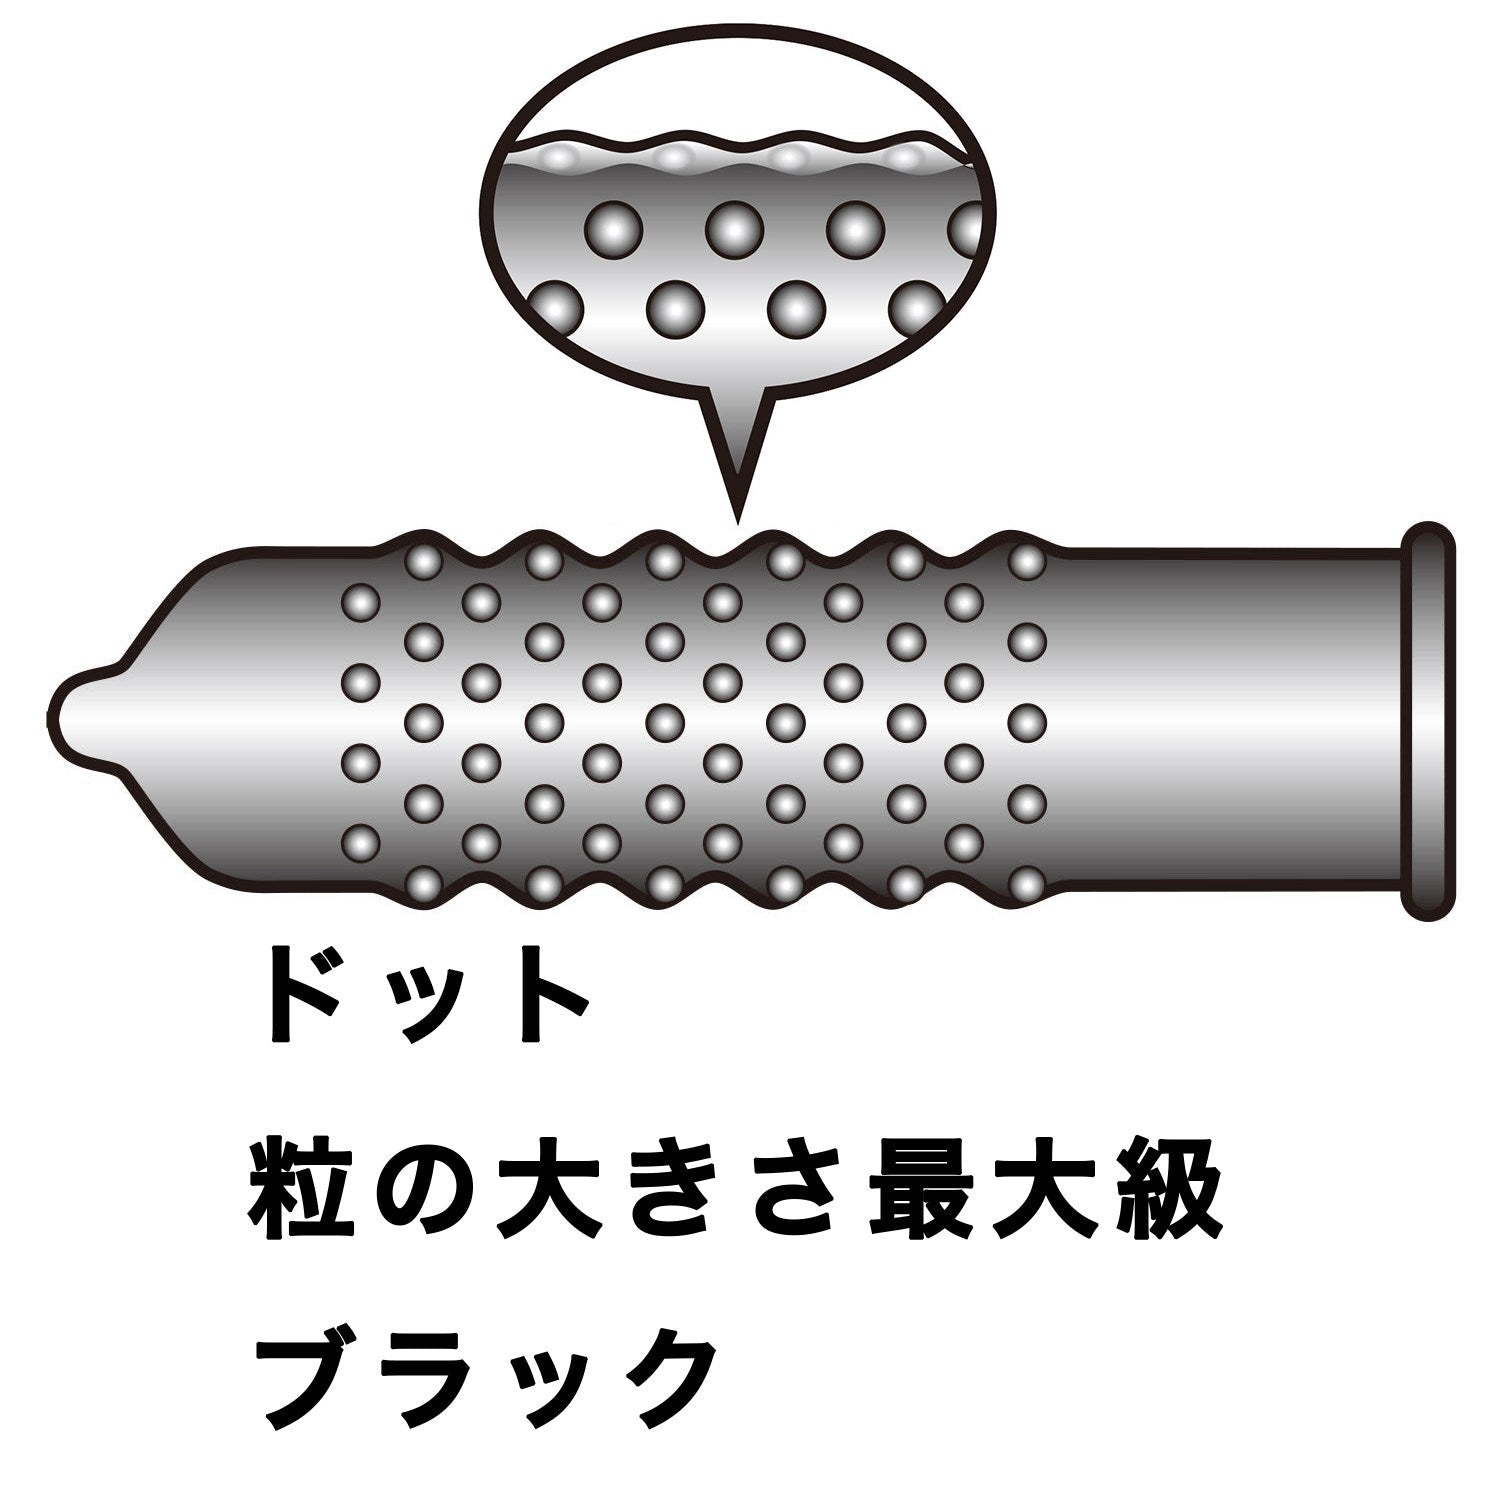 RUBBERS STYLE Dot 日本版 圓點紋安全套 5 片裝 安全套 購買